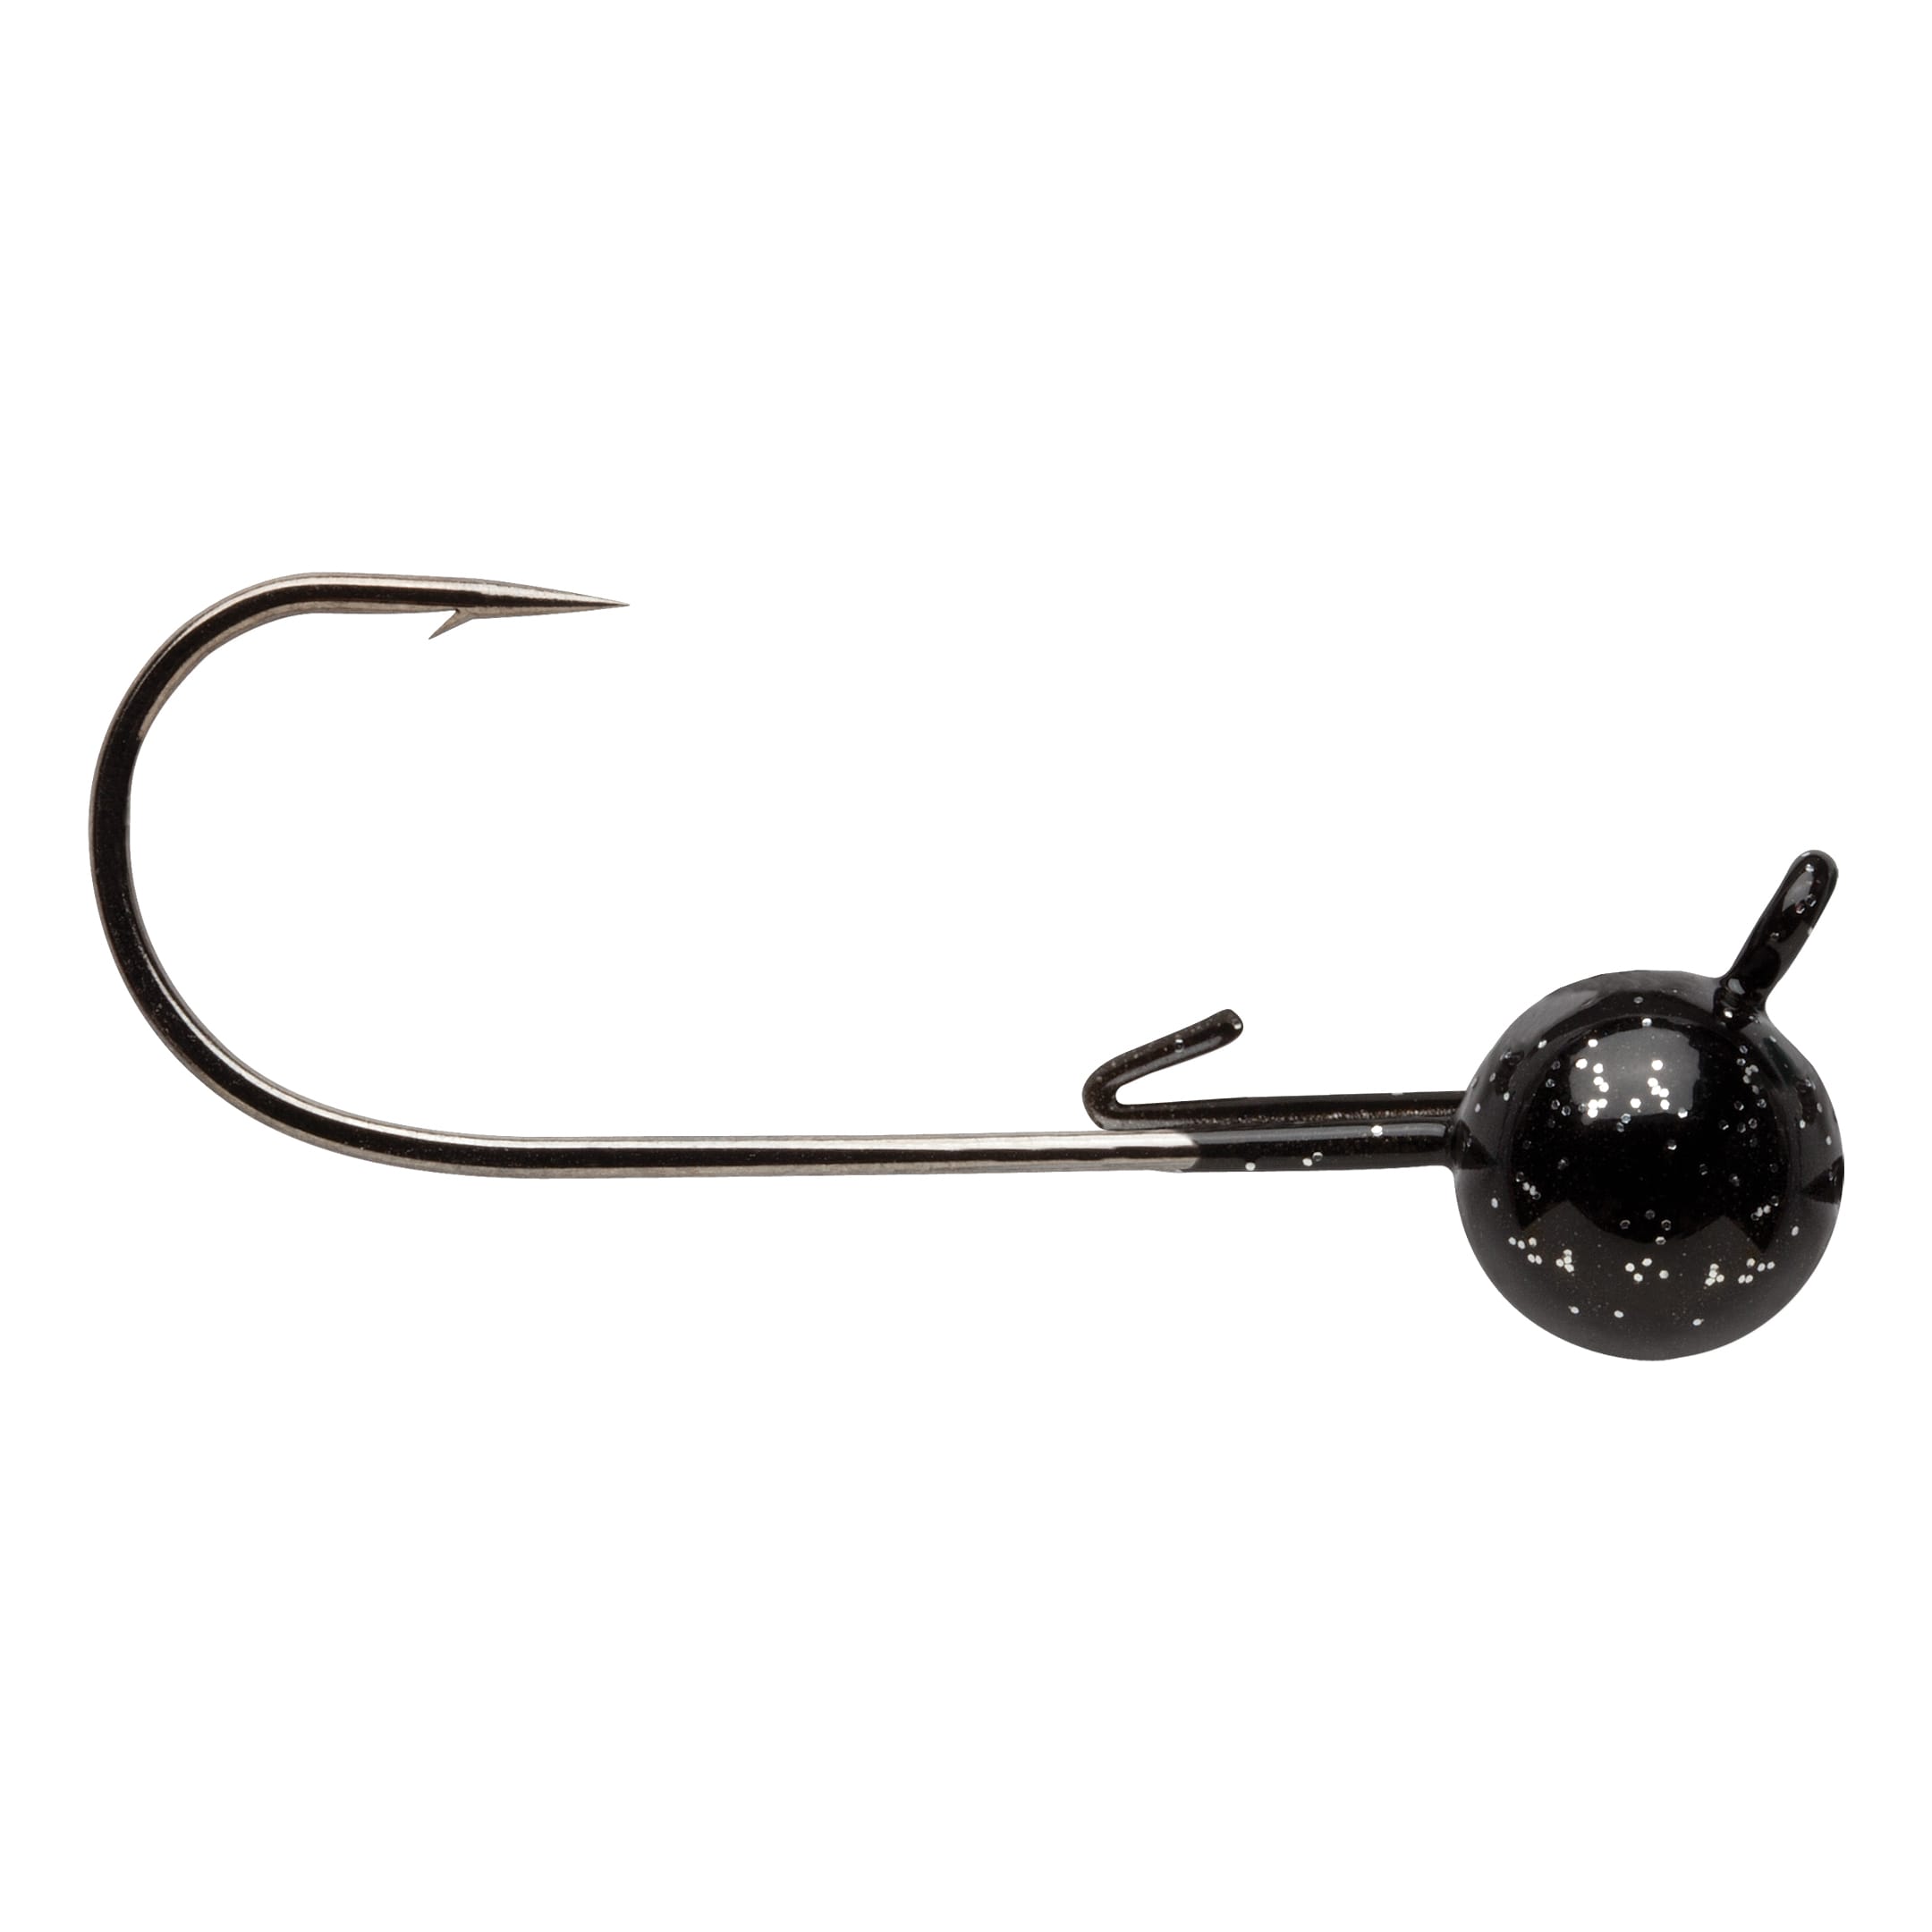 Cabela's® Fisherman Series Button Eye Jig